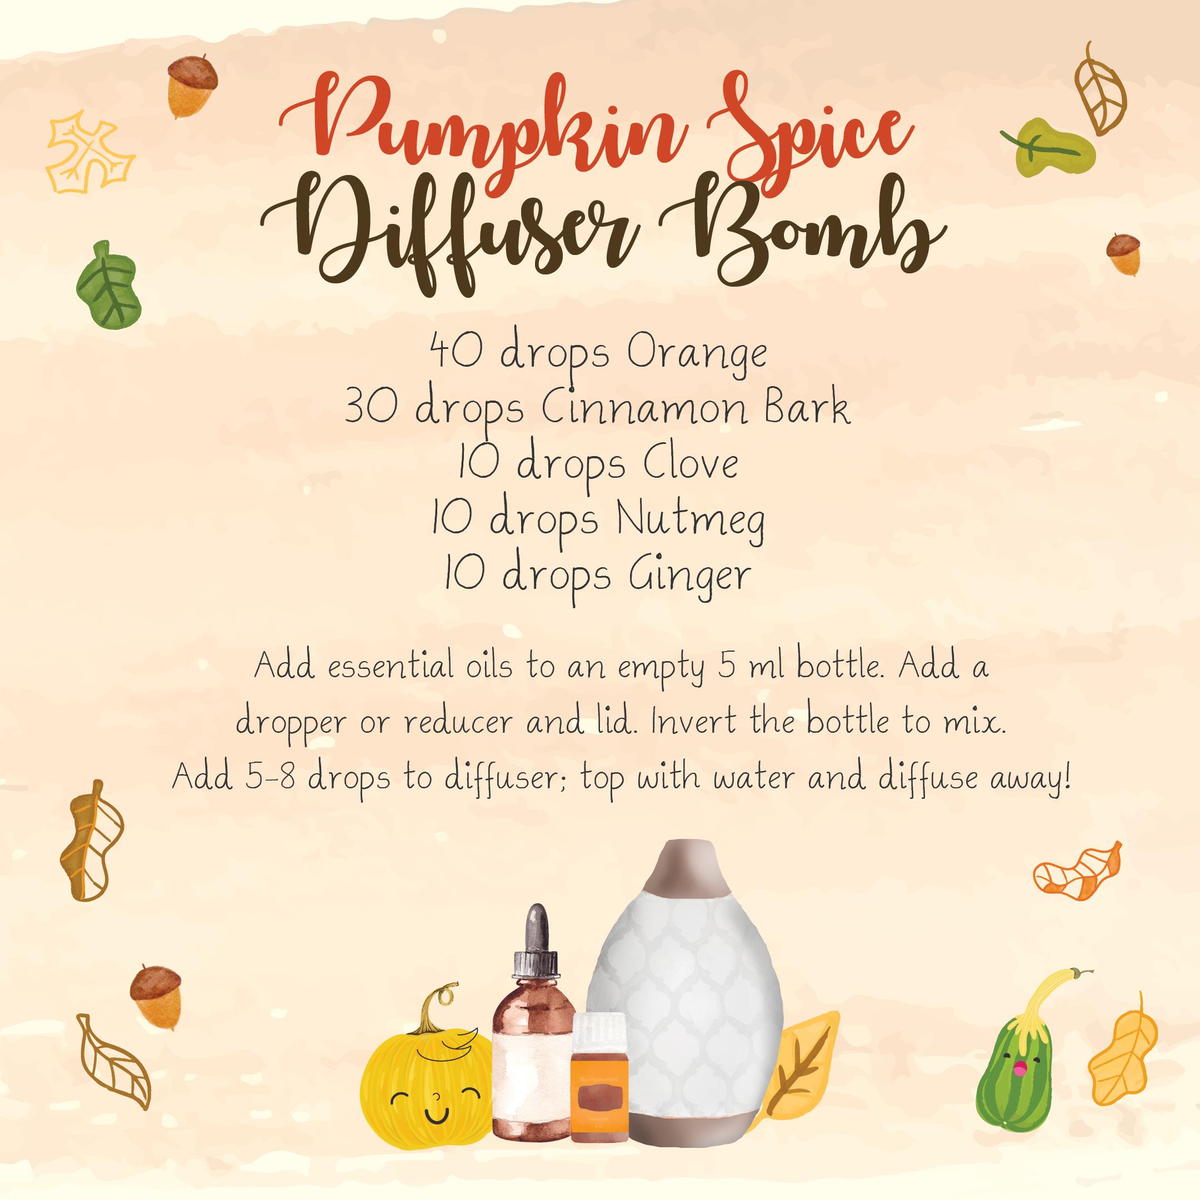 Pumpkin Spice Facts